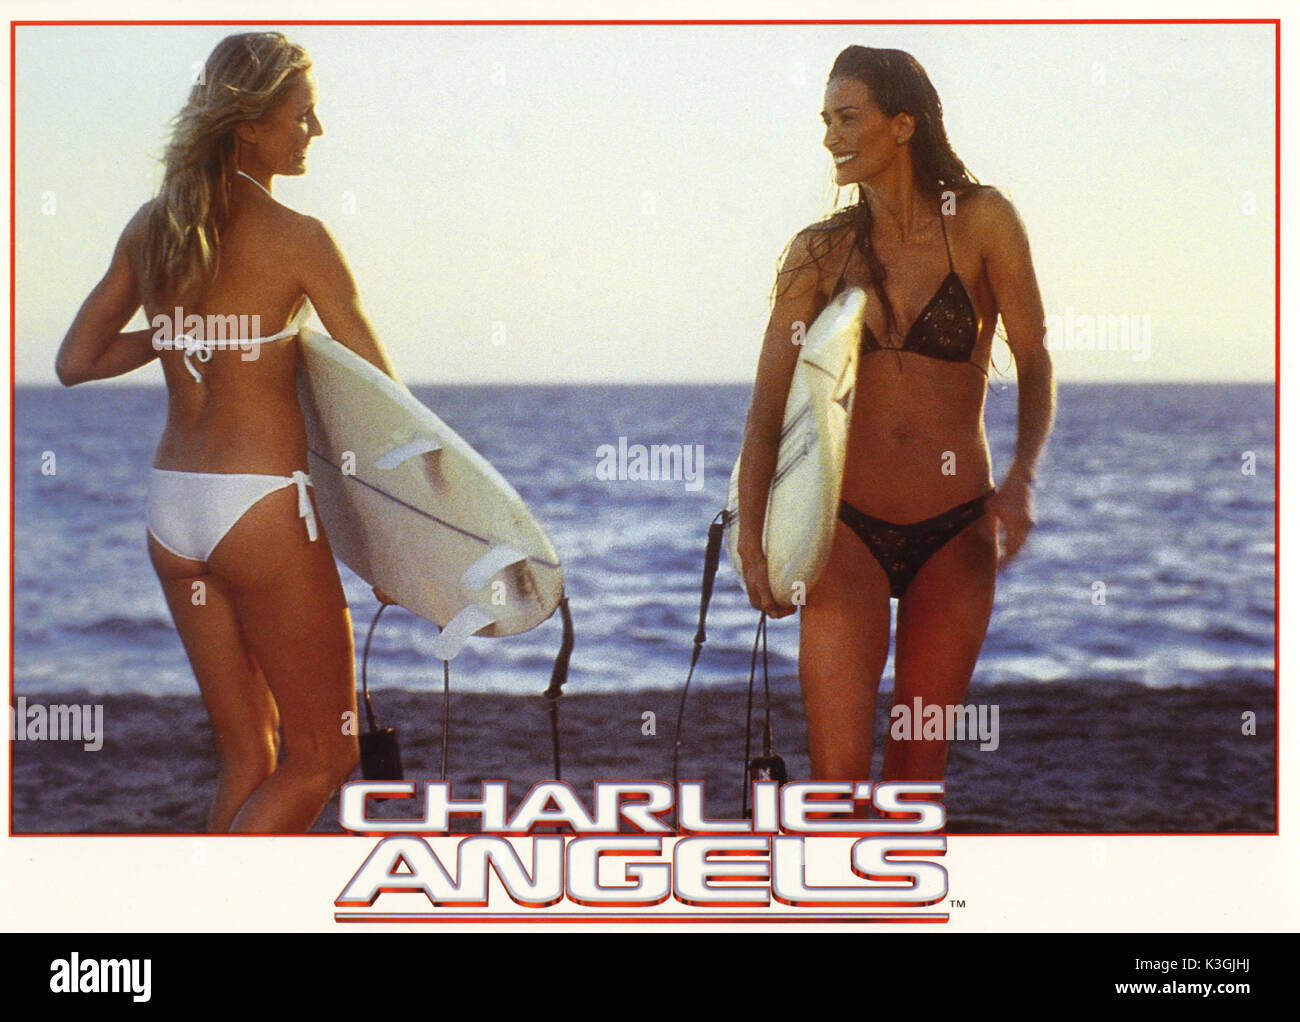 CHARLIE'S ANGELS: FULL THROTTLE  [US 2003]  CAMERON DIAZ, DEMI MOORE     Date: 2003 Stock Photo